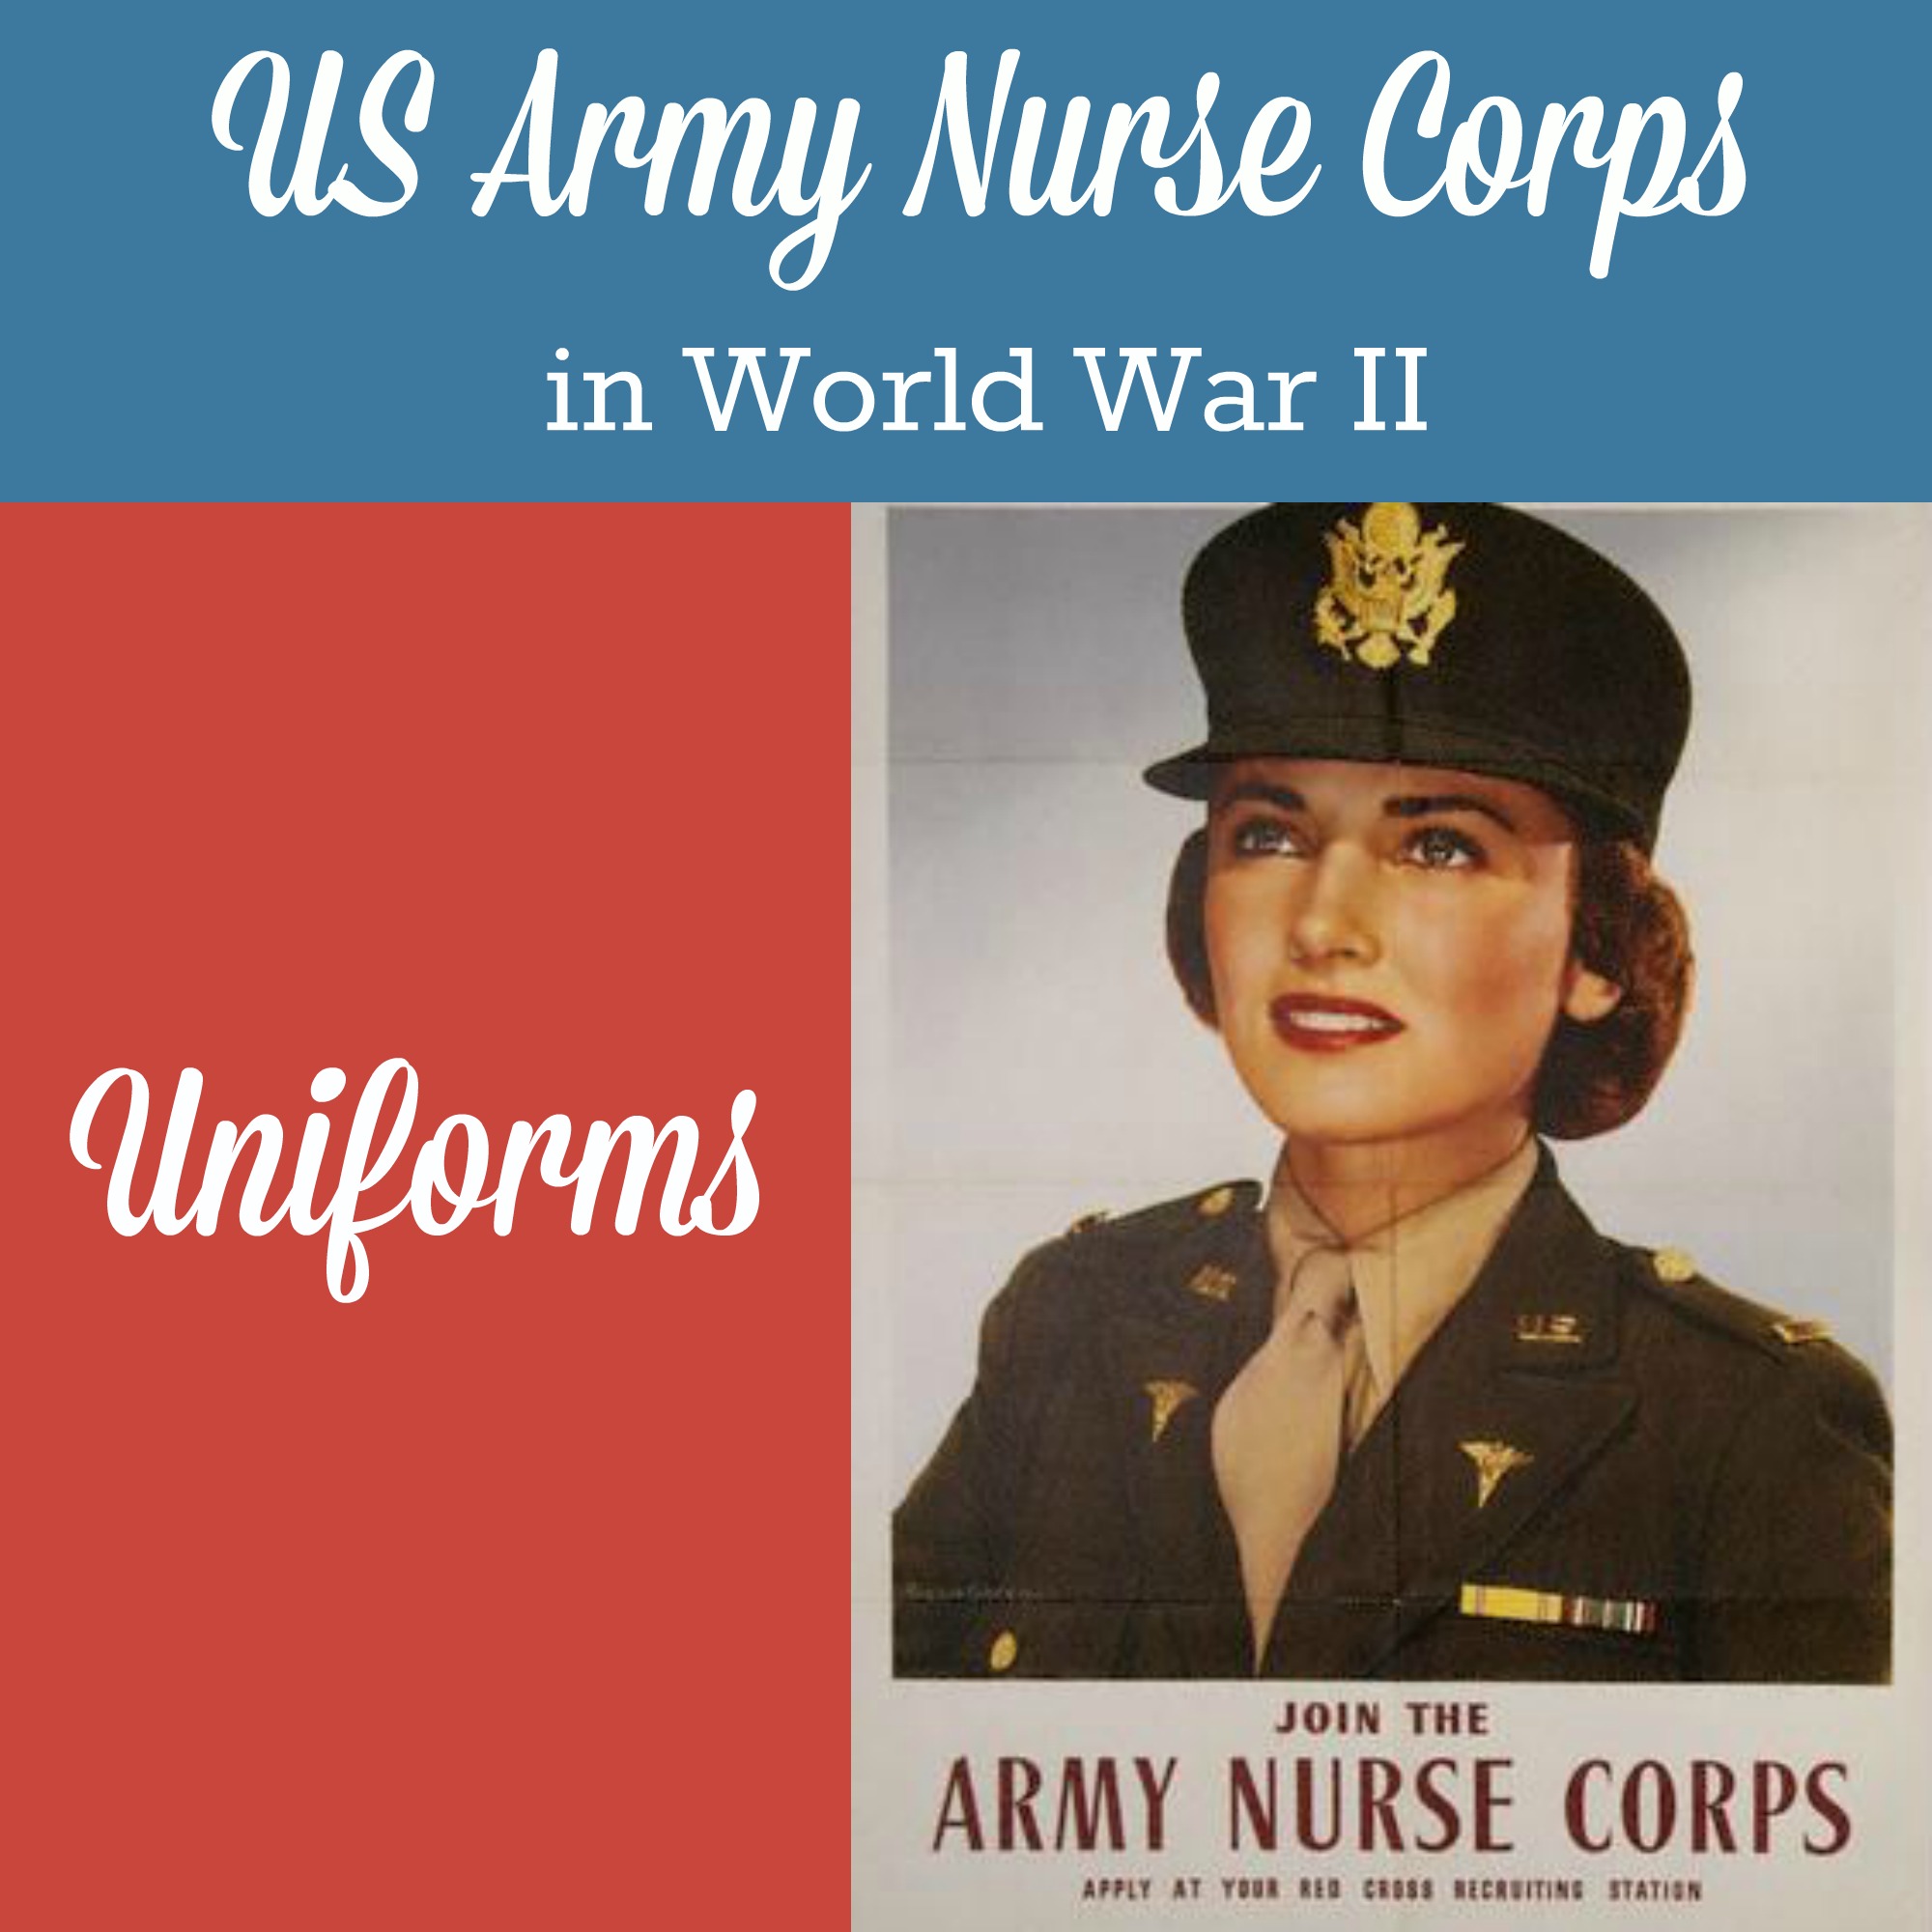 Army Nursing in World War II - Uniforms